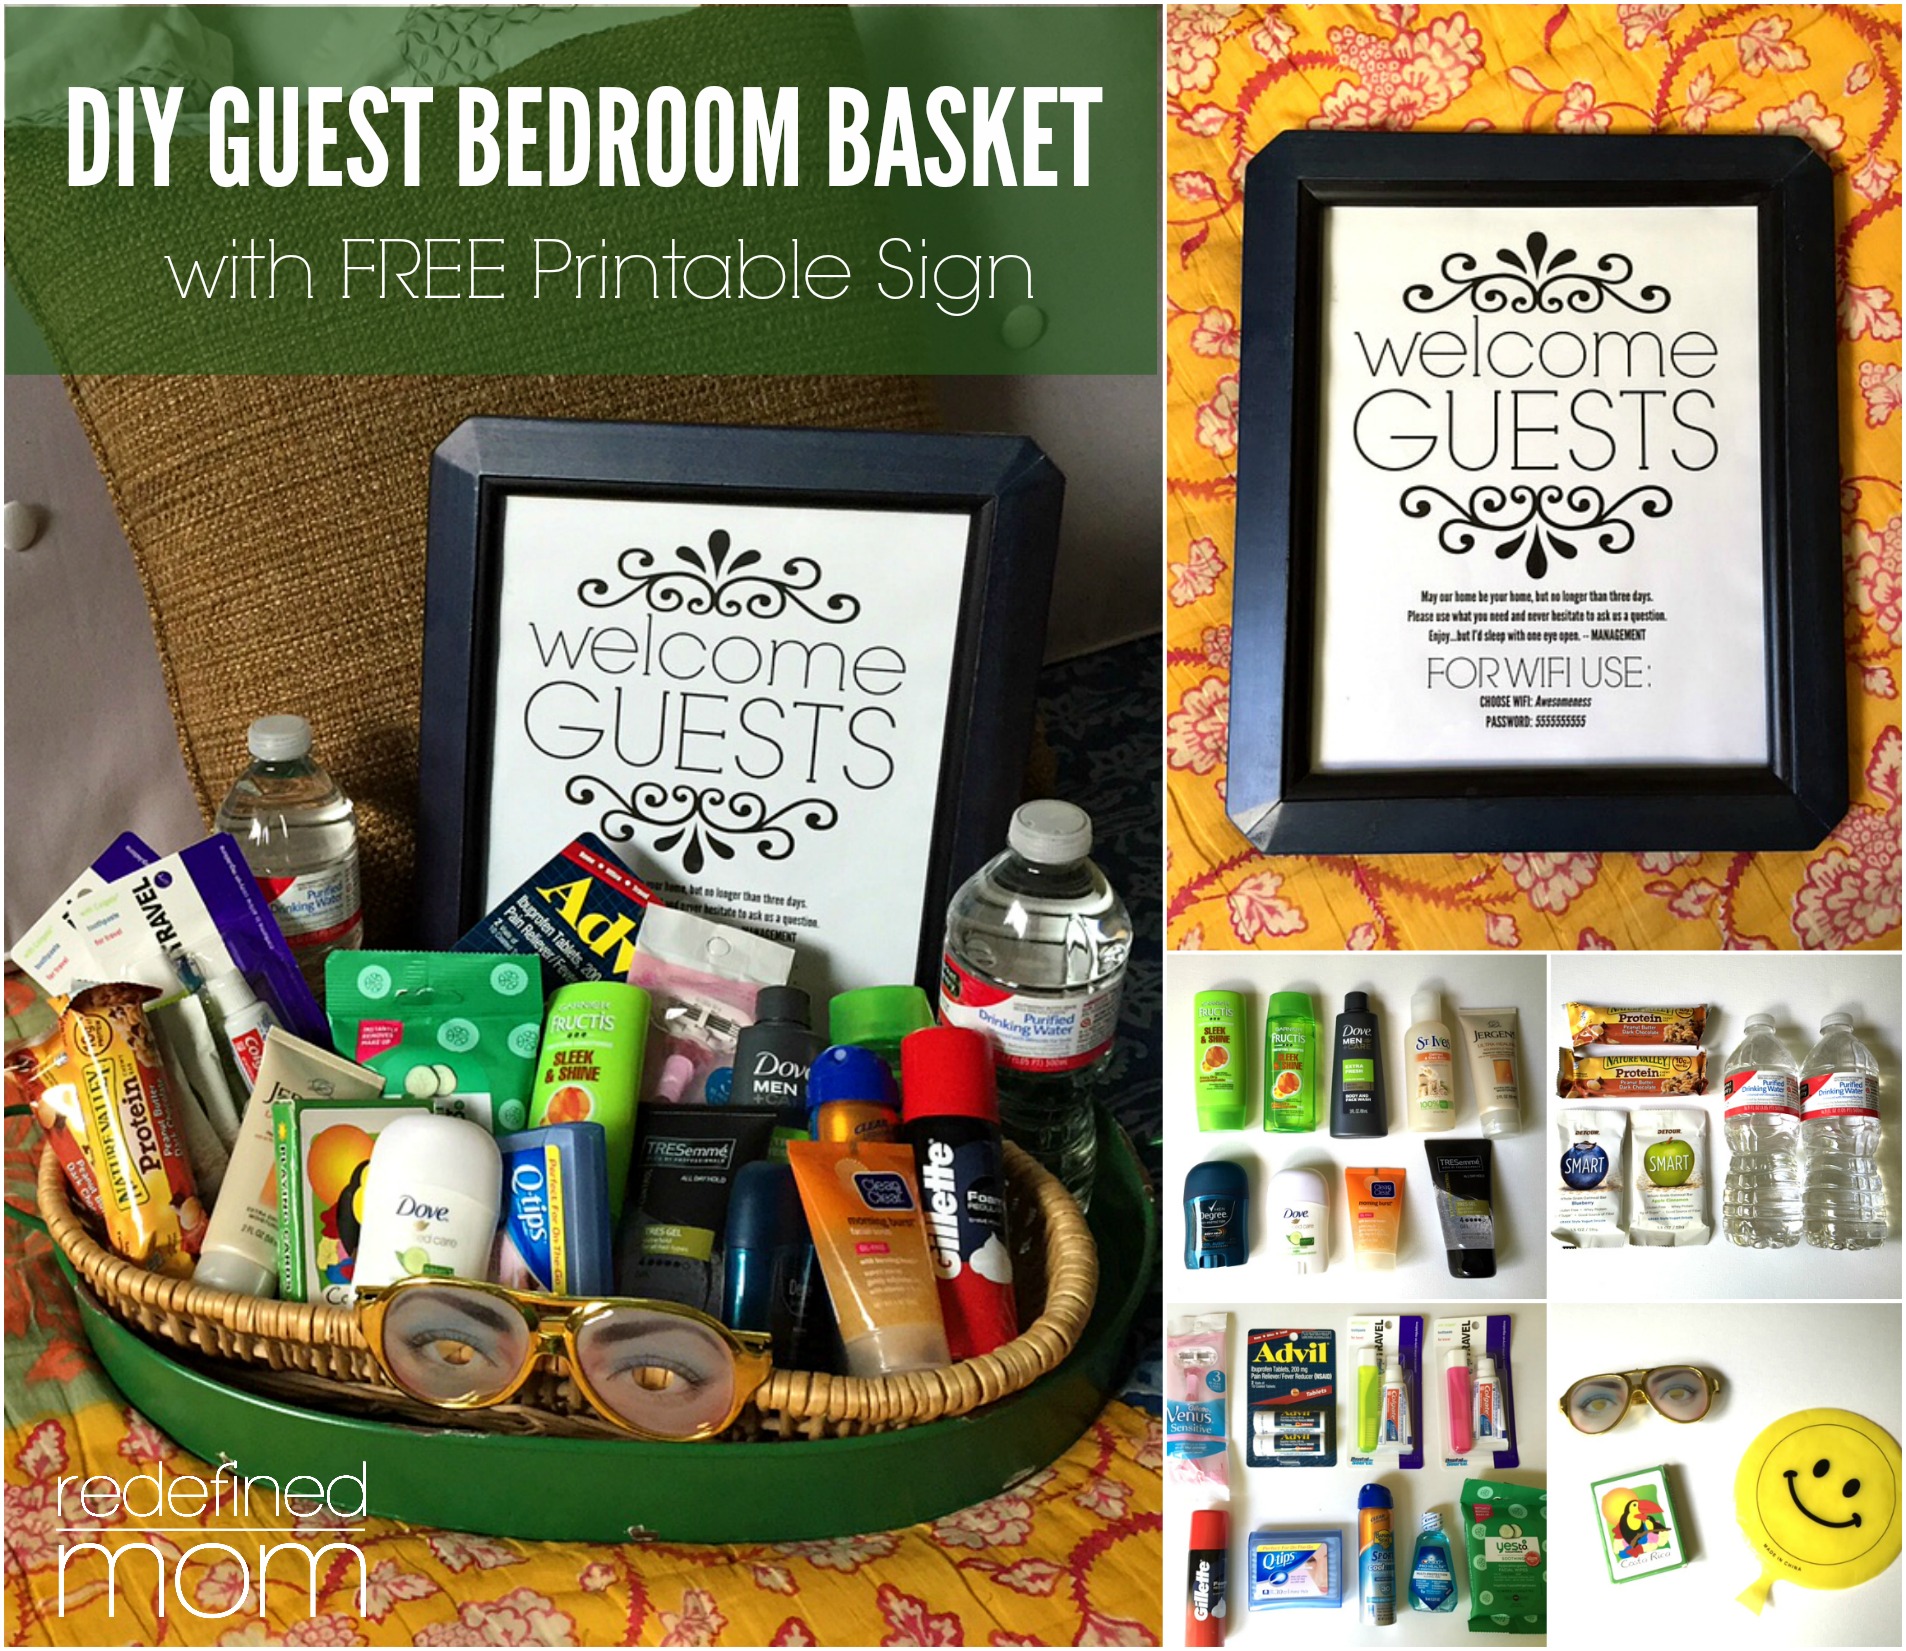 DIY Guest Bedroom Basket with Free Printable Sign